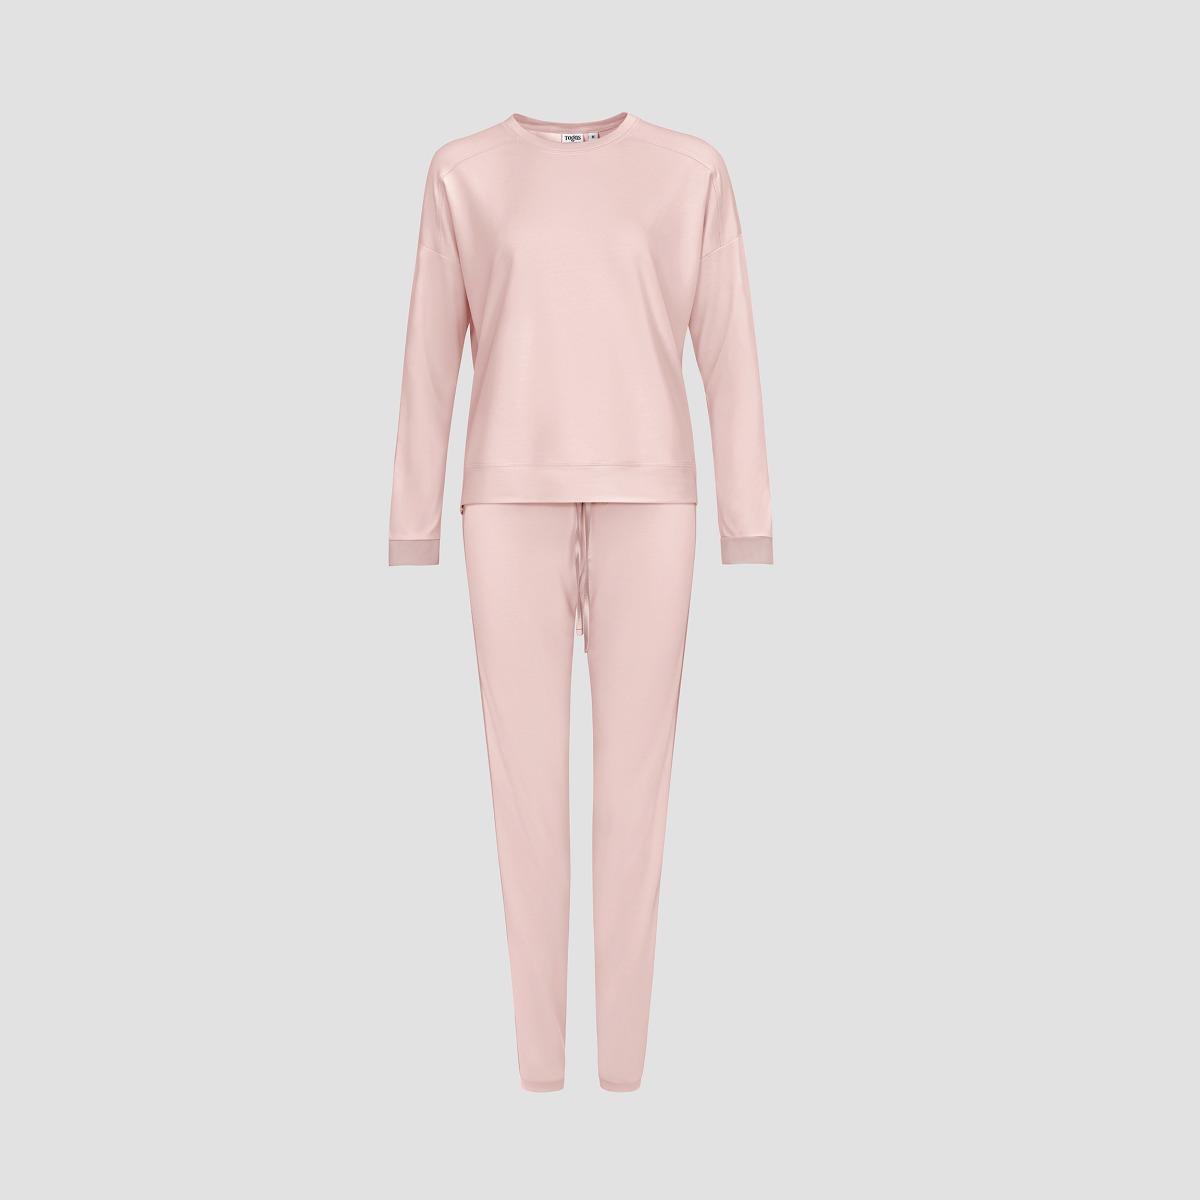 Пижама Togas Рене розовая женская жен пижама арт 17 0310 персиковый р 46